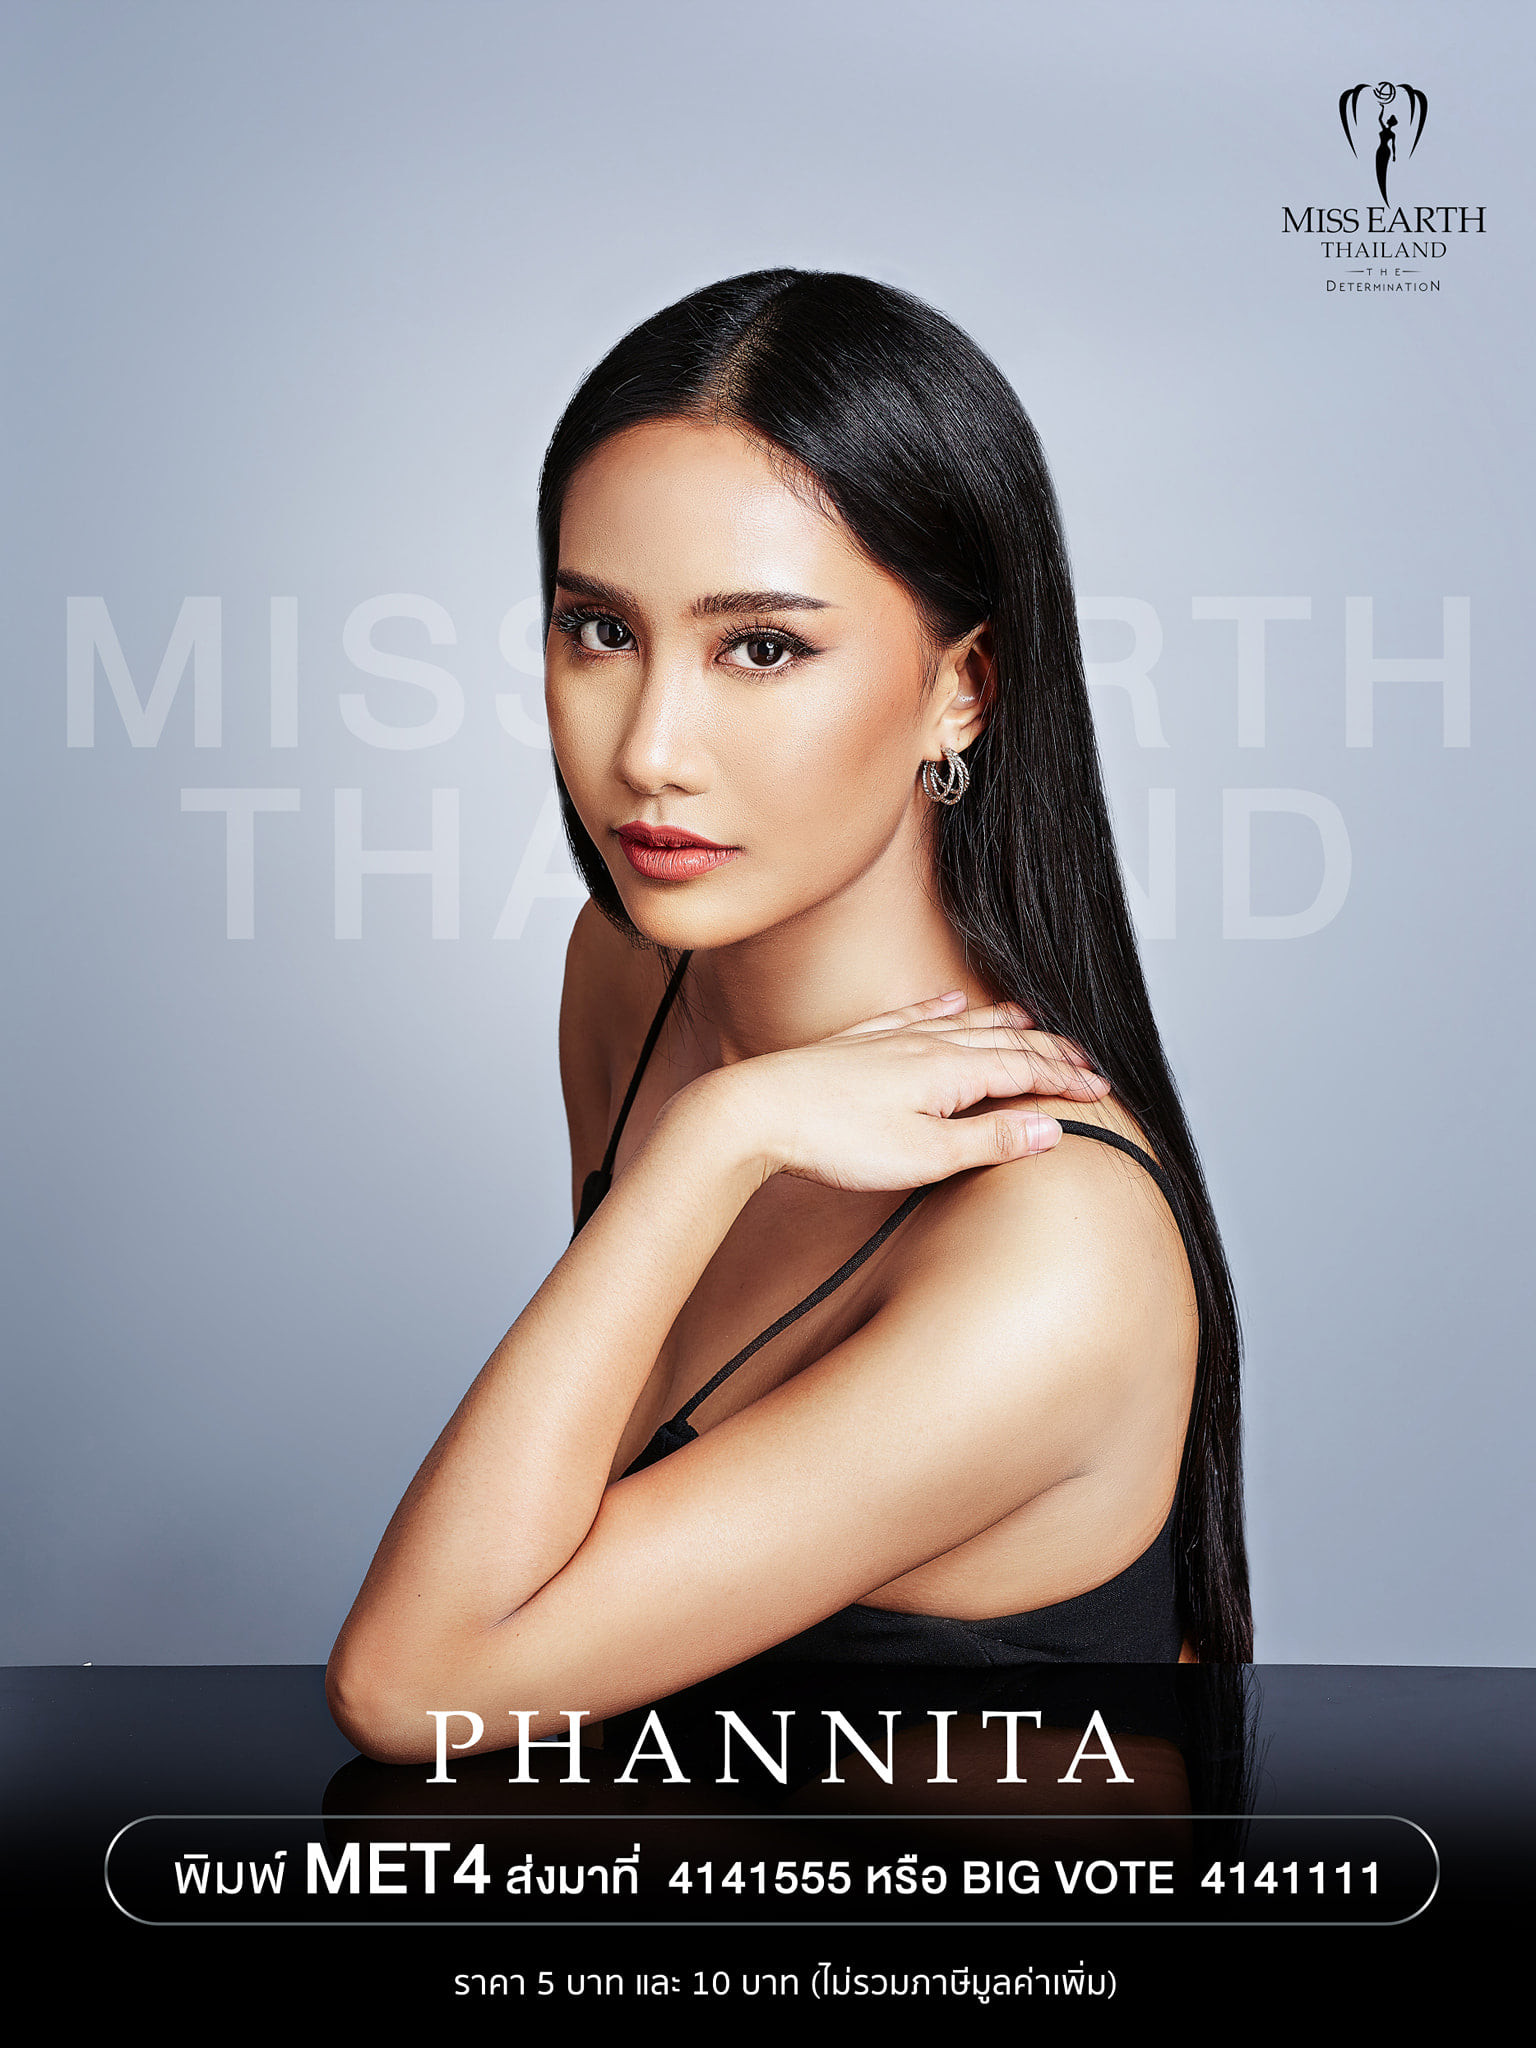 candidatas a miss earth thailand 2021. final: 25 sep. - Página 2 O777II